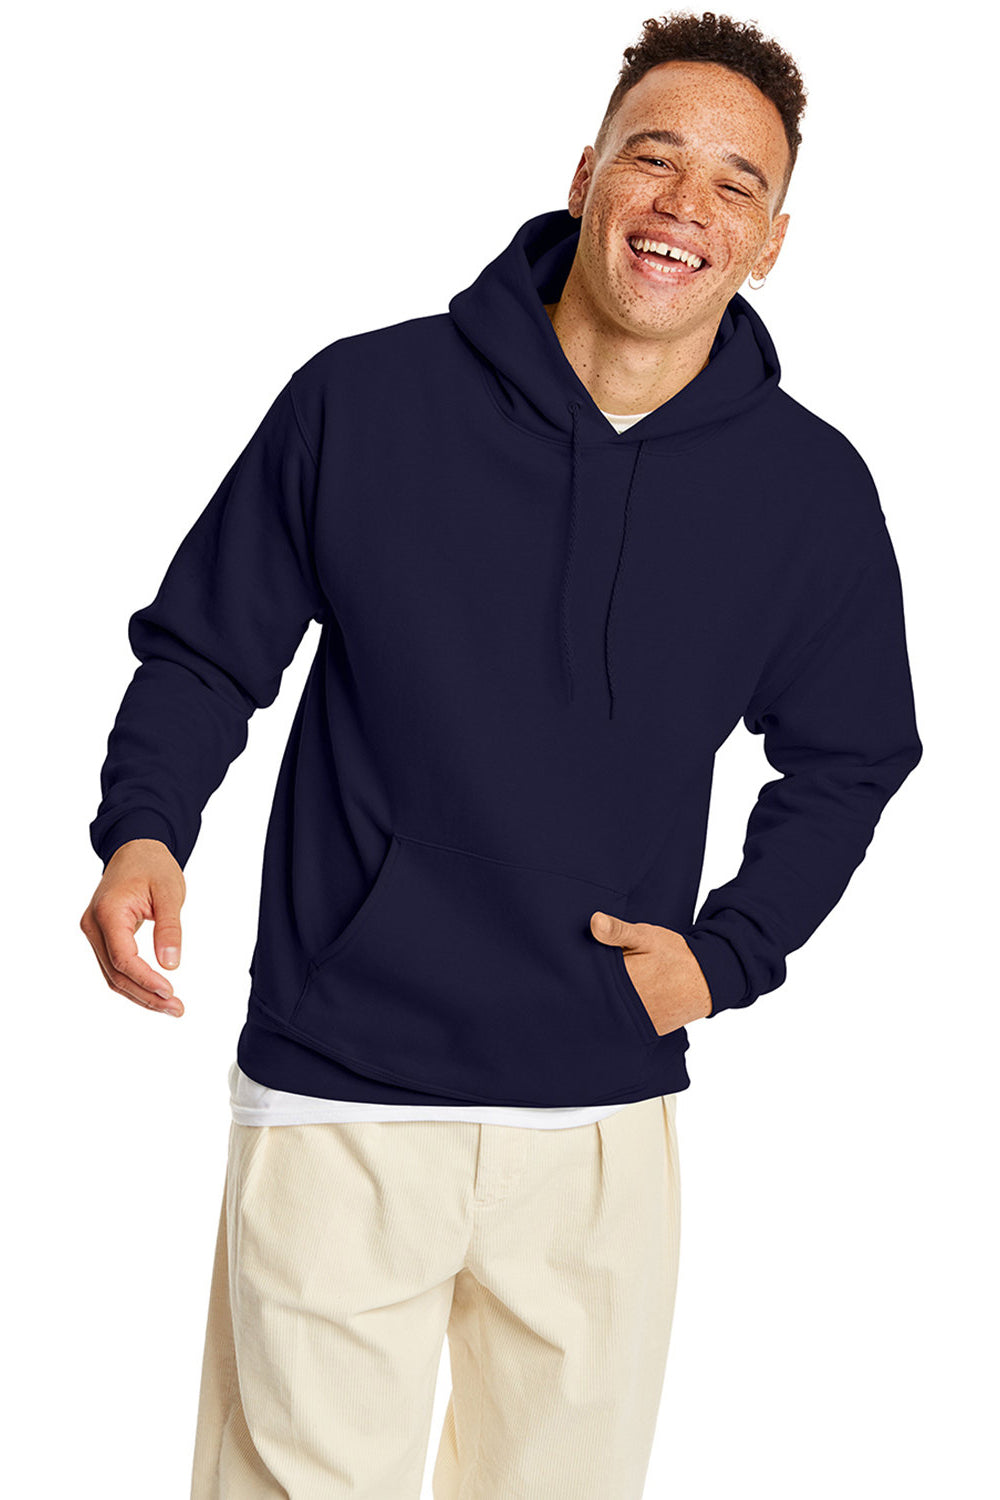 Hanes P170 Mens EcoSmart Print Pro XP Hooded Sweatshirt Hoodie Athletic Navy Blue Front